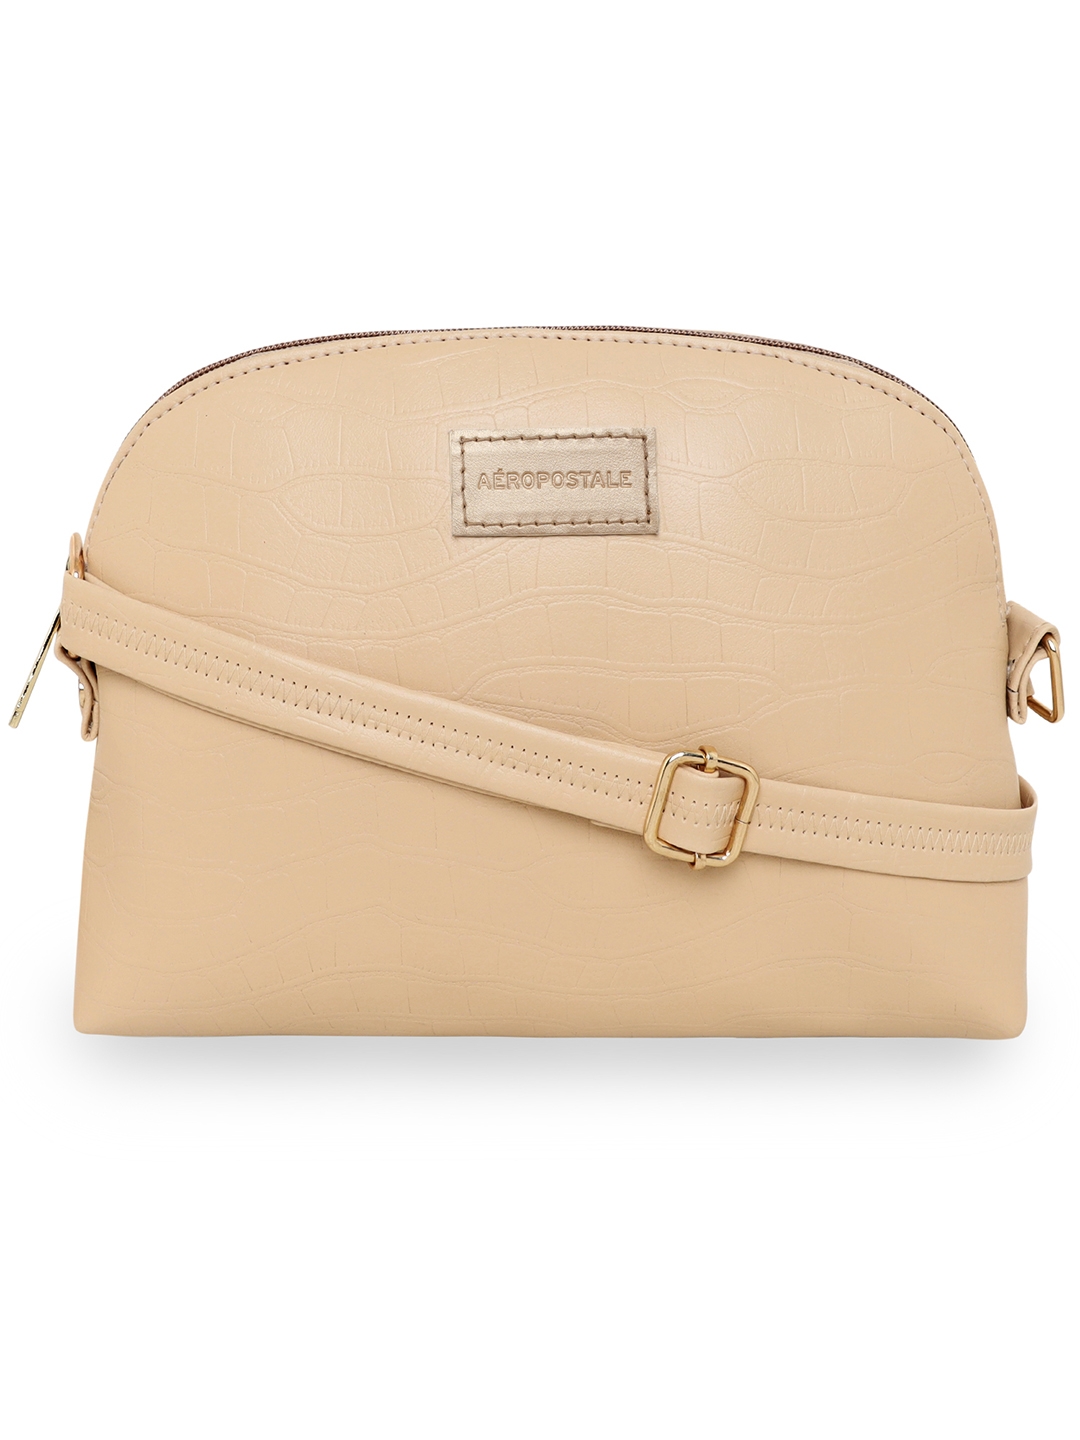 Aeropostale | Aeropostale Textured Kylie PU Sling Bag with non-detachable strap (Cream) 0